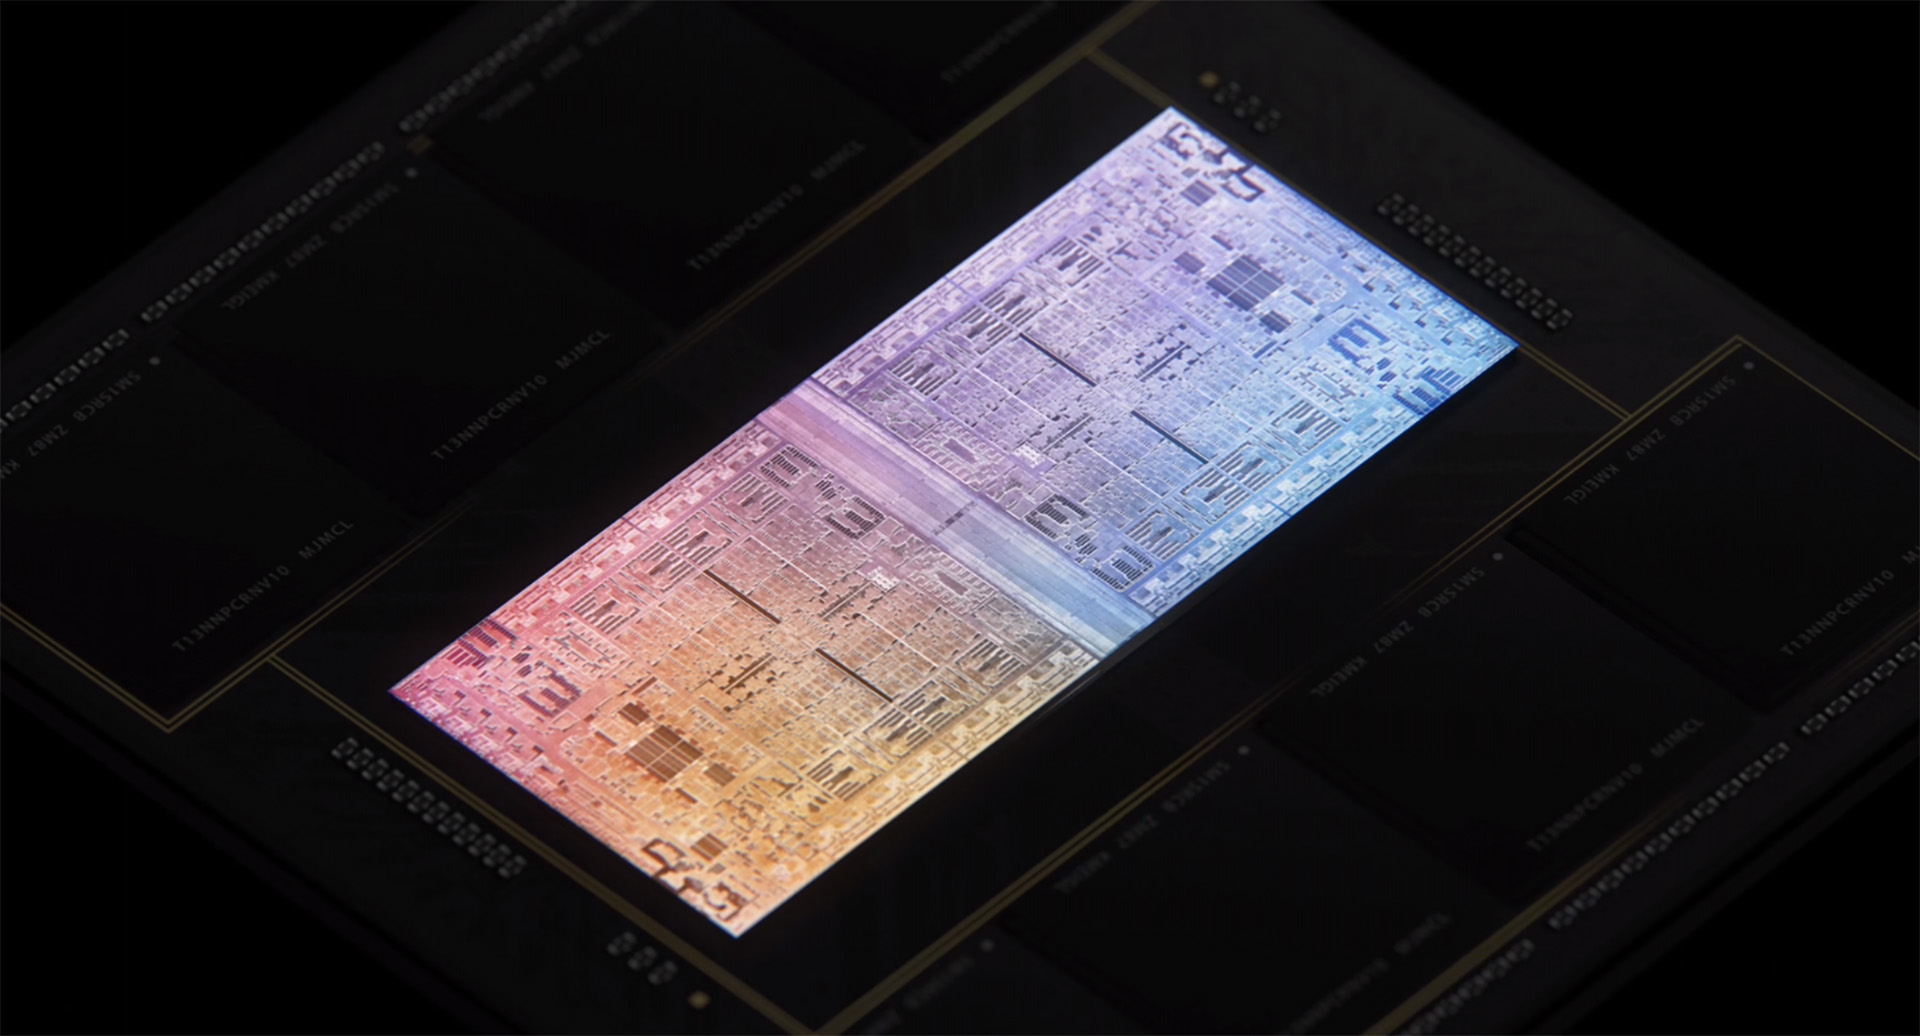 M1 Ultra Doesn't Beat Out Nvidia's RTX 3090 GPU Despite Apple's